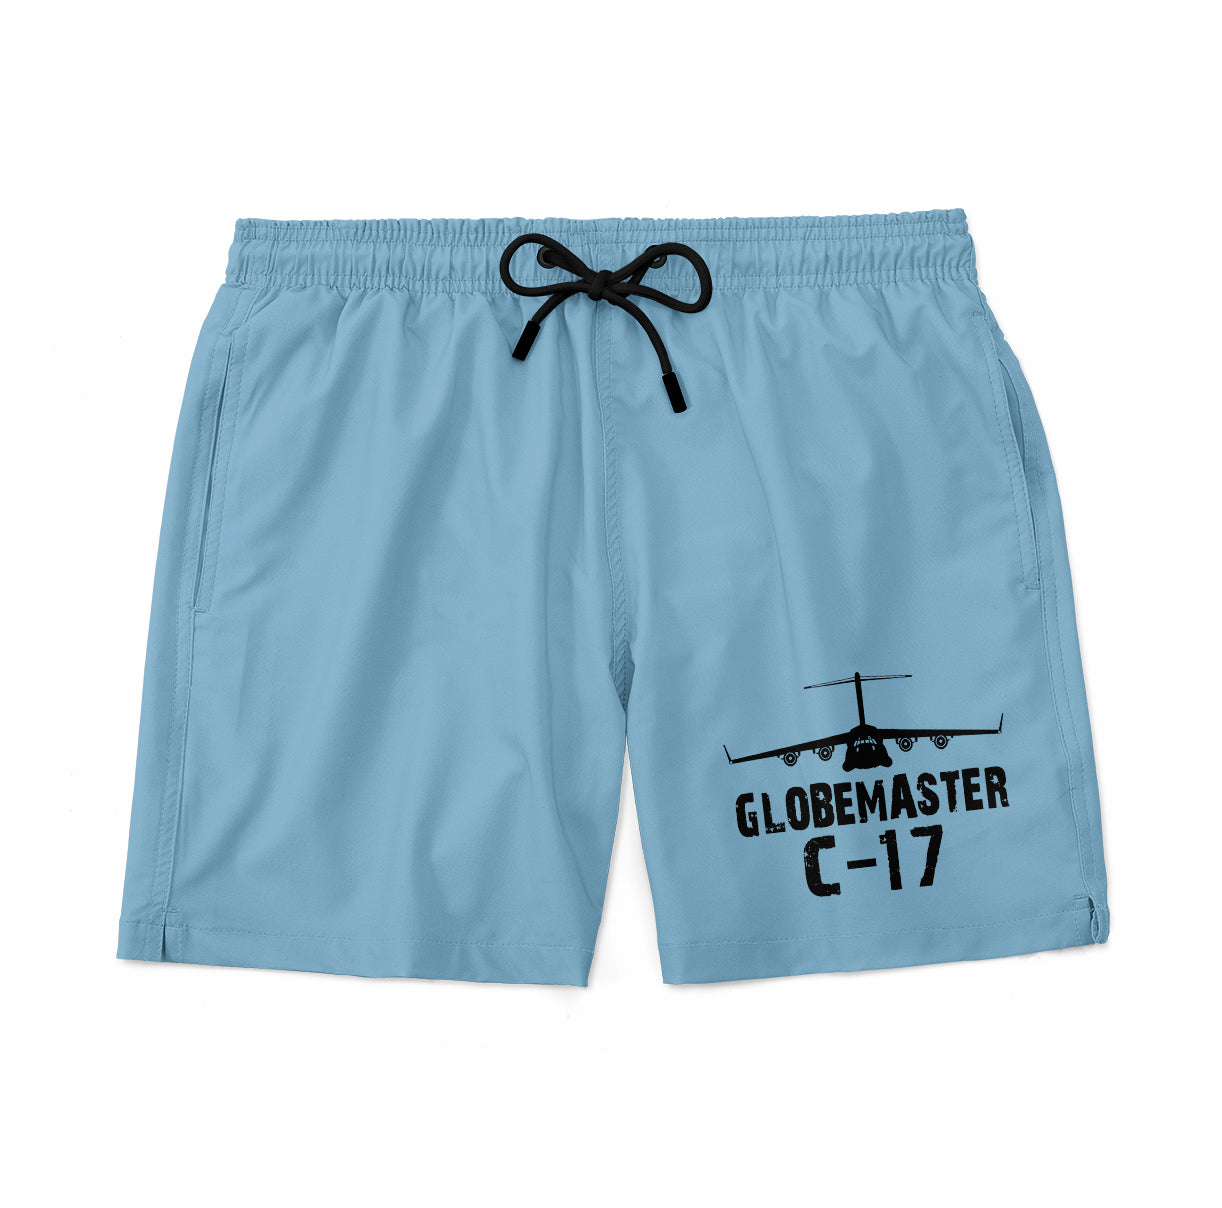 GlobeMaster C-17 & Plane Designed Swim Trunks & Shorts